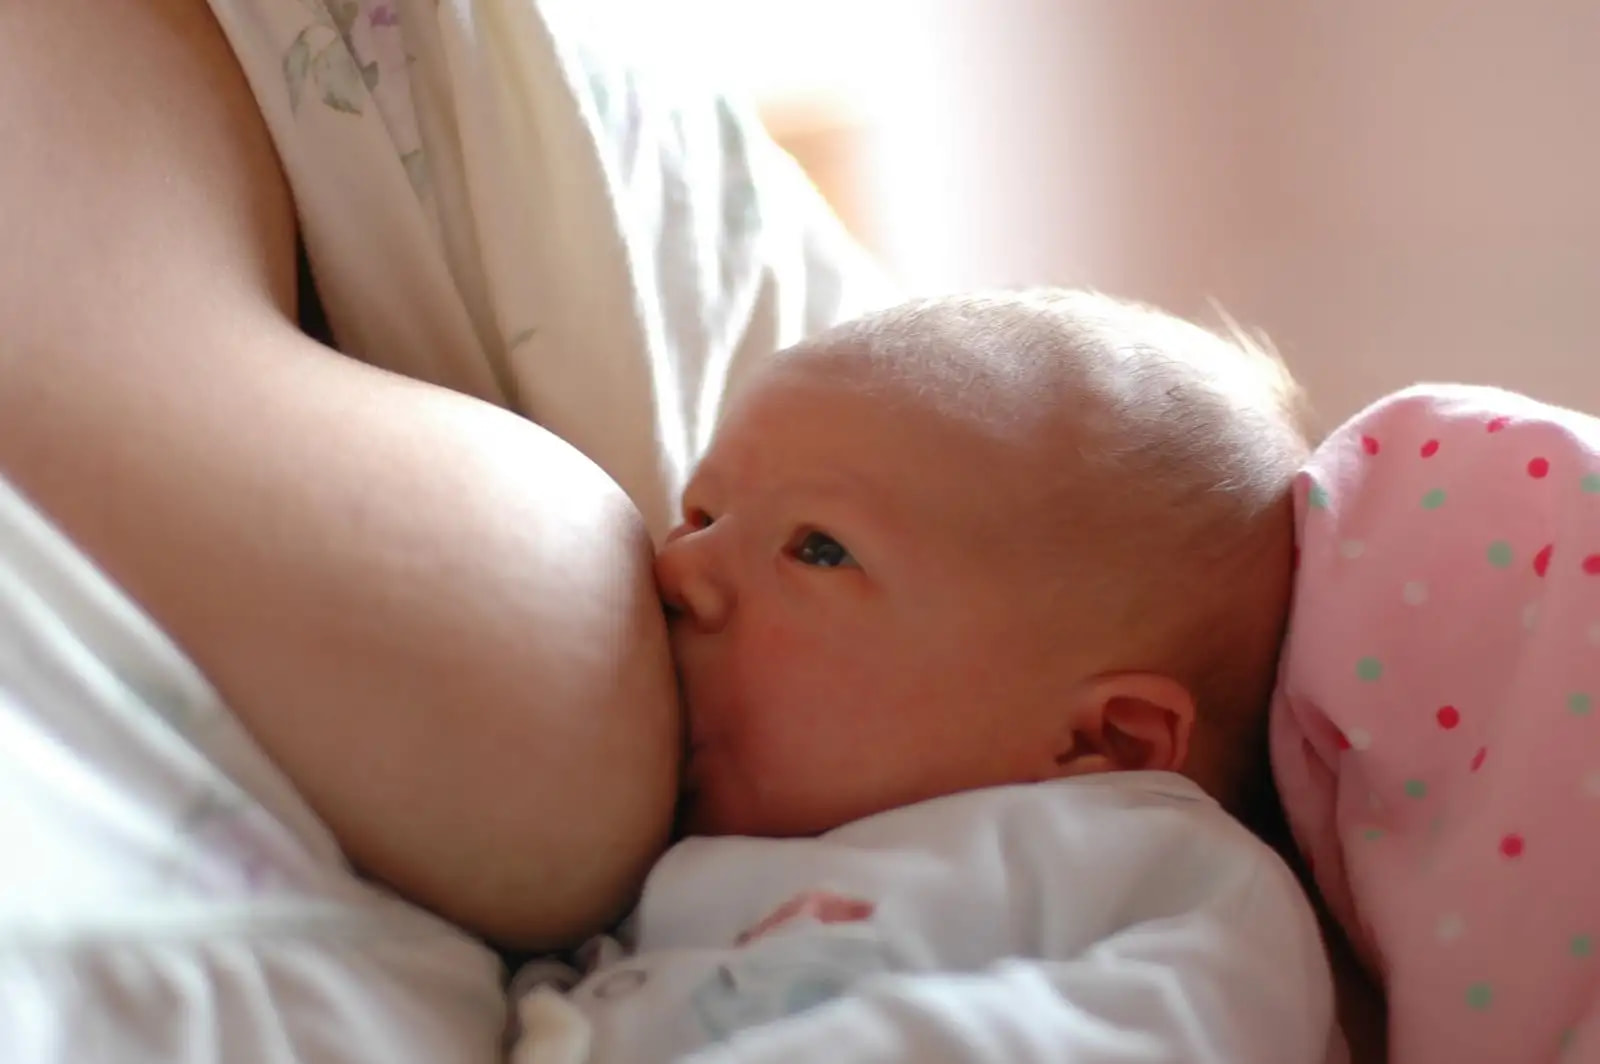 How to Stop Breastfeeding?